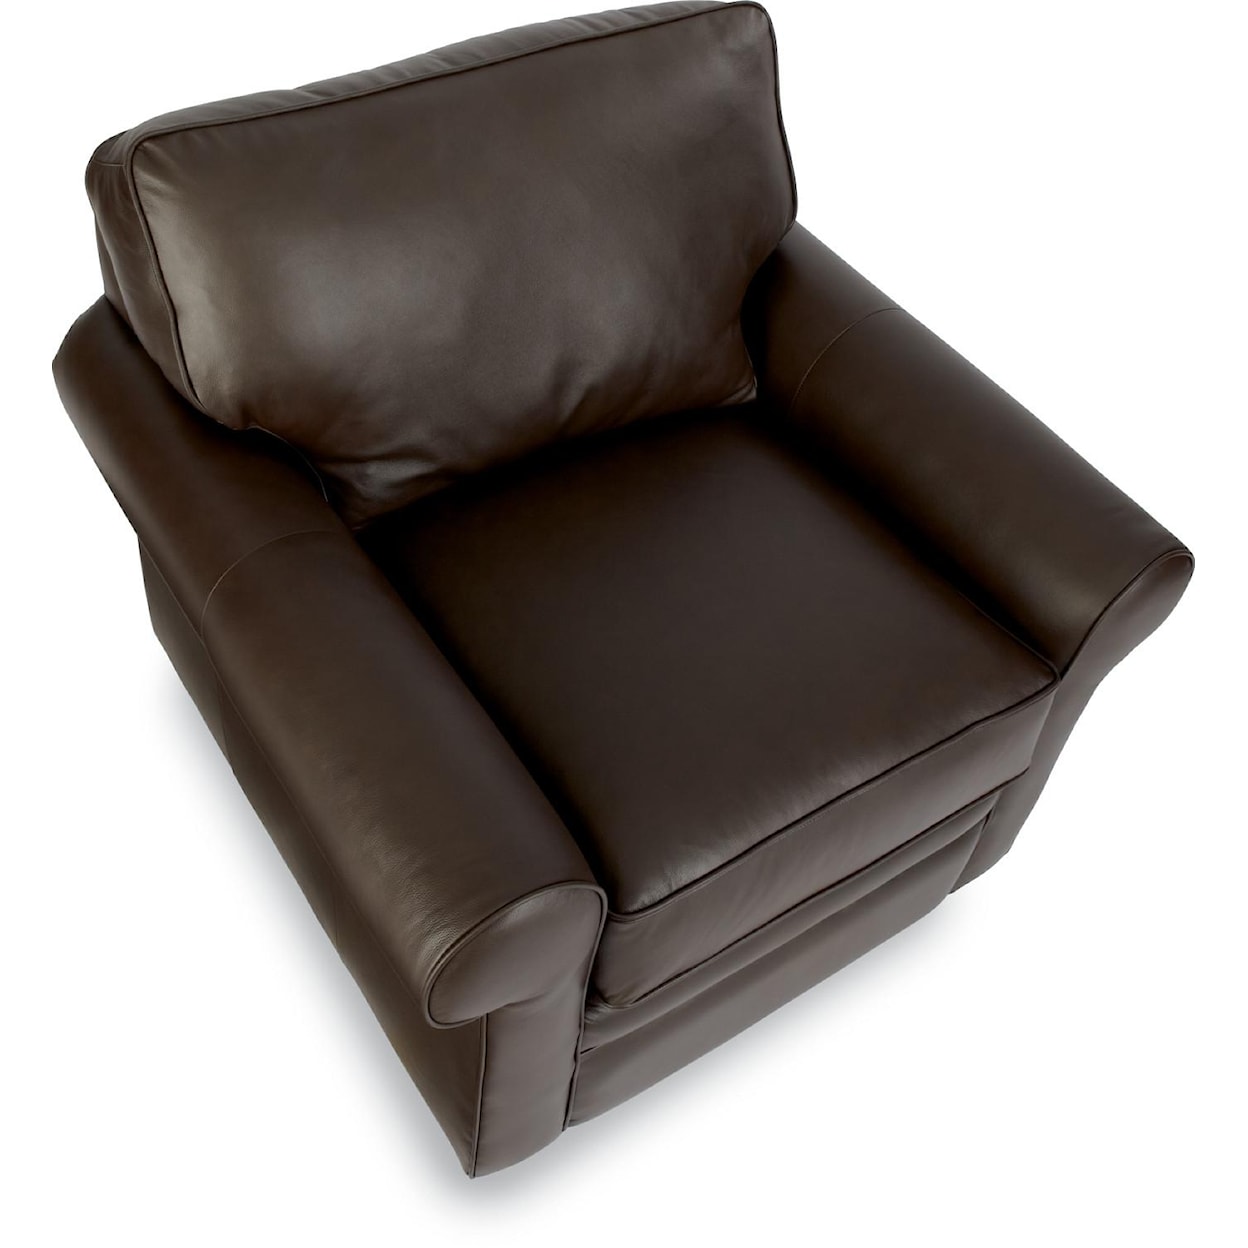 La-Z-Boy Collins Upholstered Chair